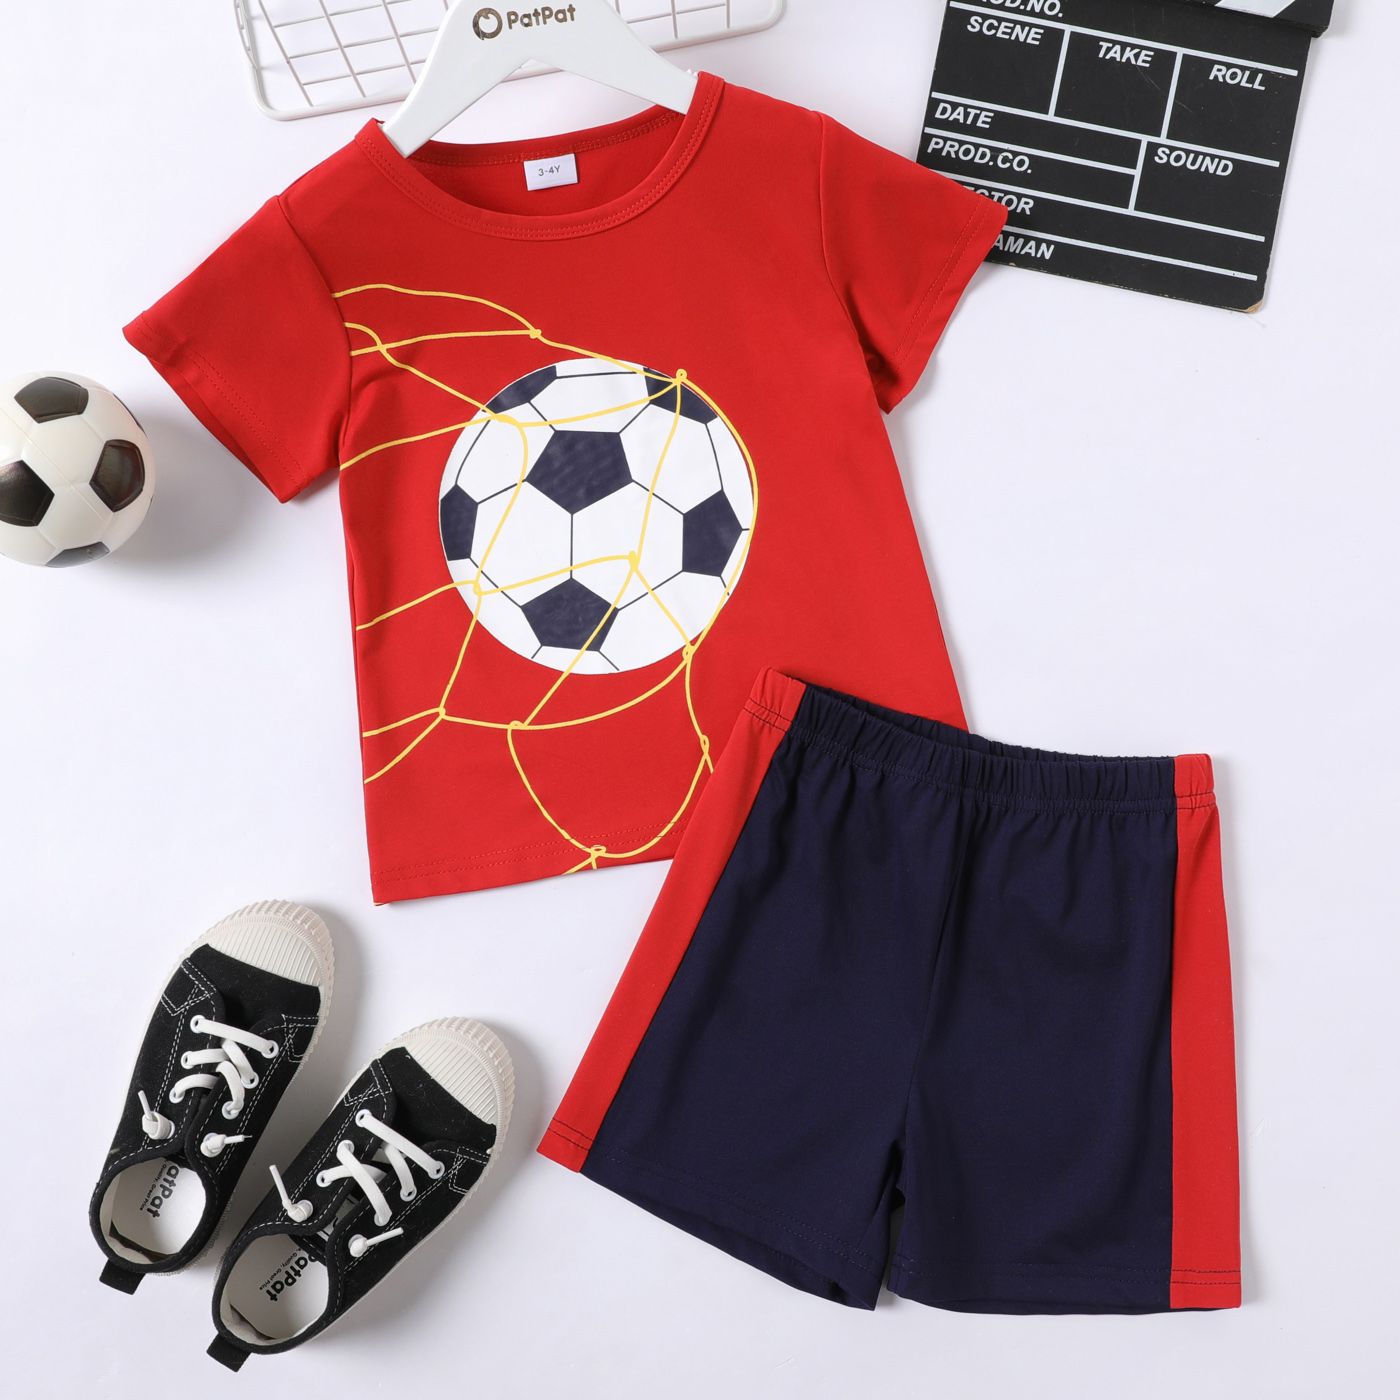 2-piece Kid Boy Basketball/Football Print Short-sleeve Tee and Elasticized Shorts Set